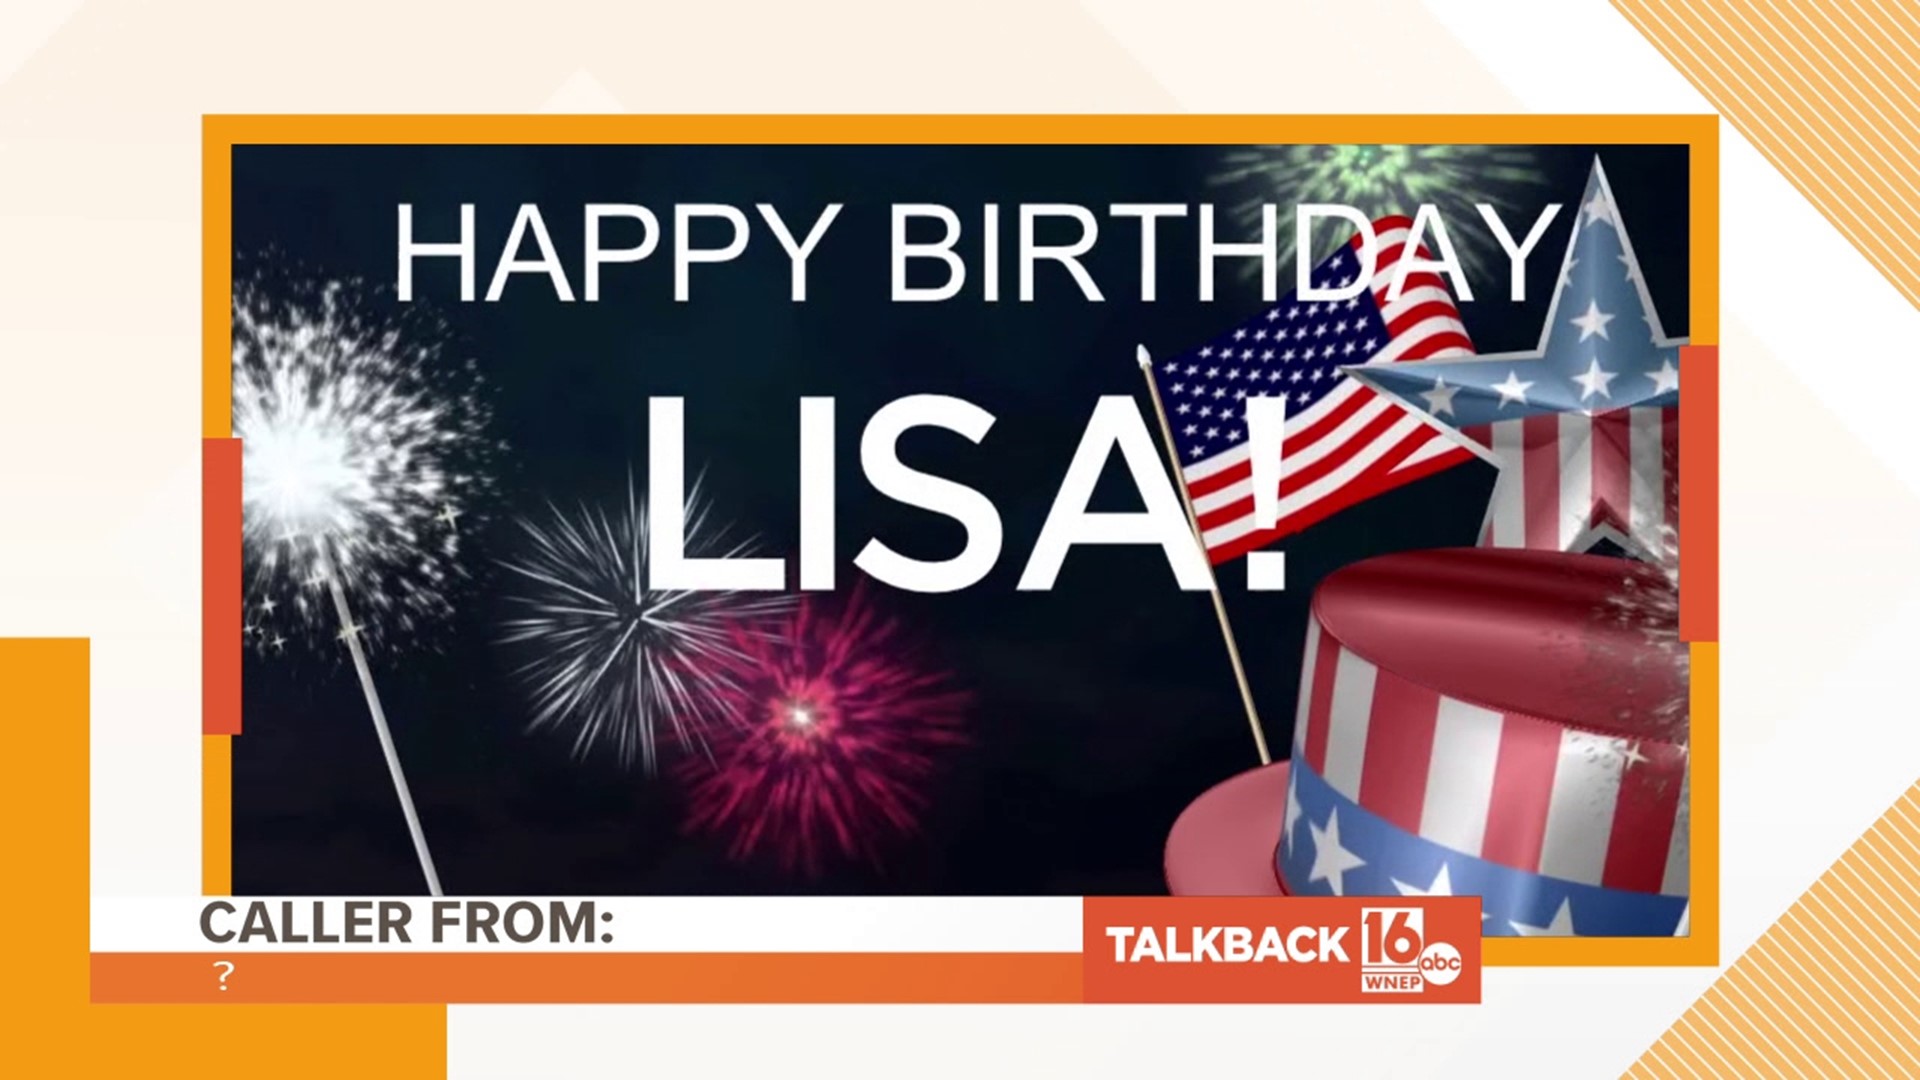 One caller wants to wish Lisa Washington a very Happy Birthday.